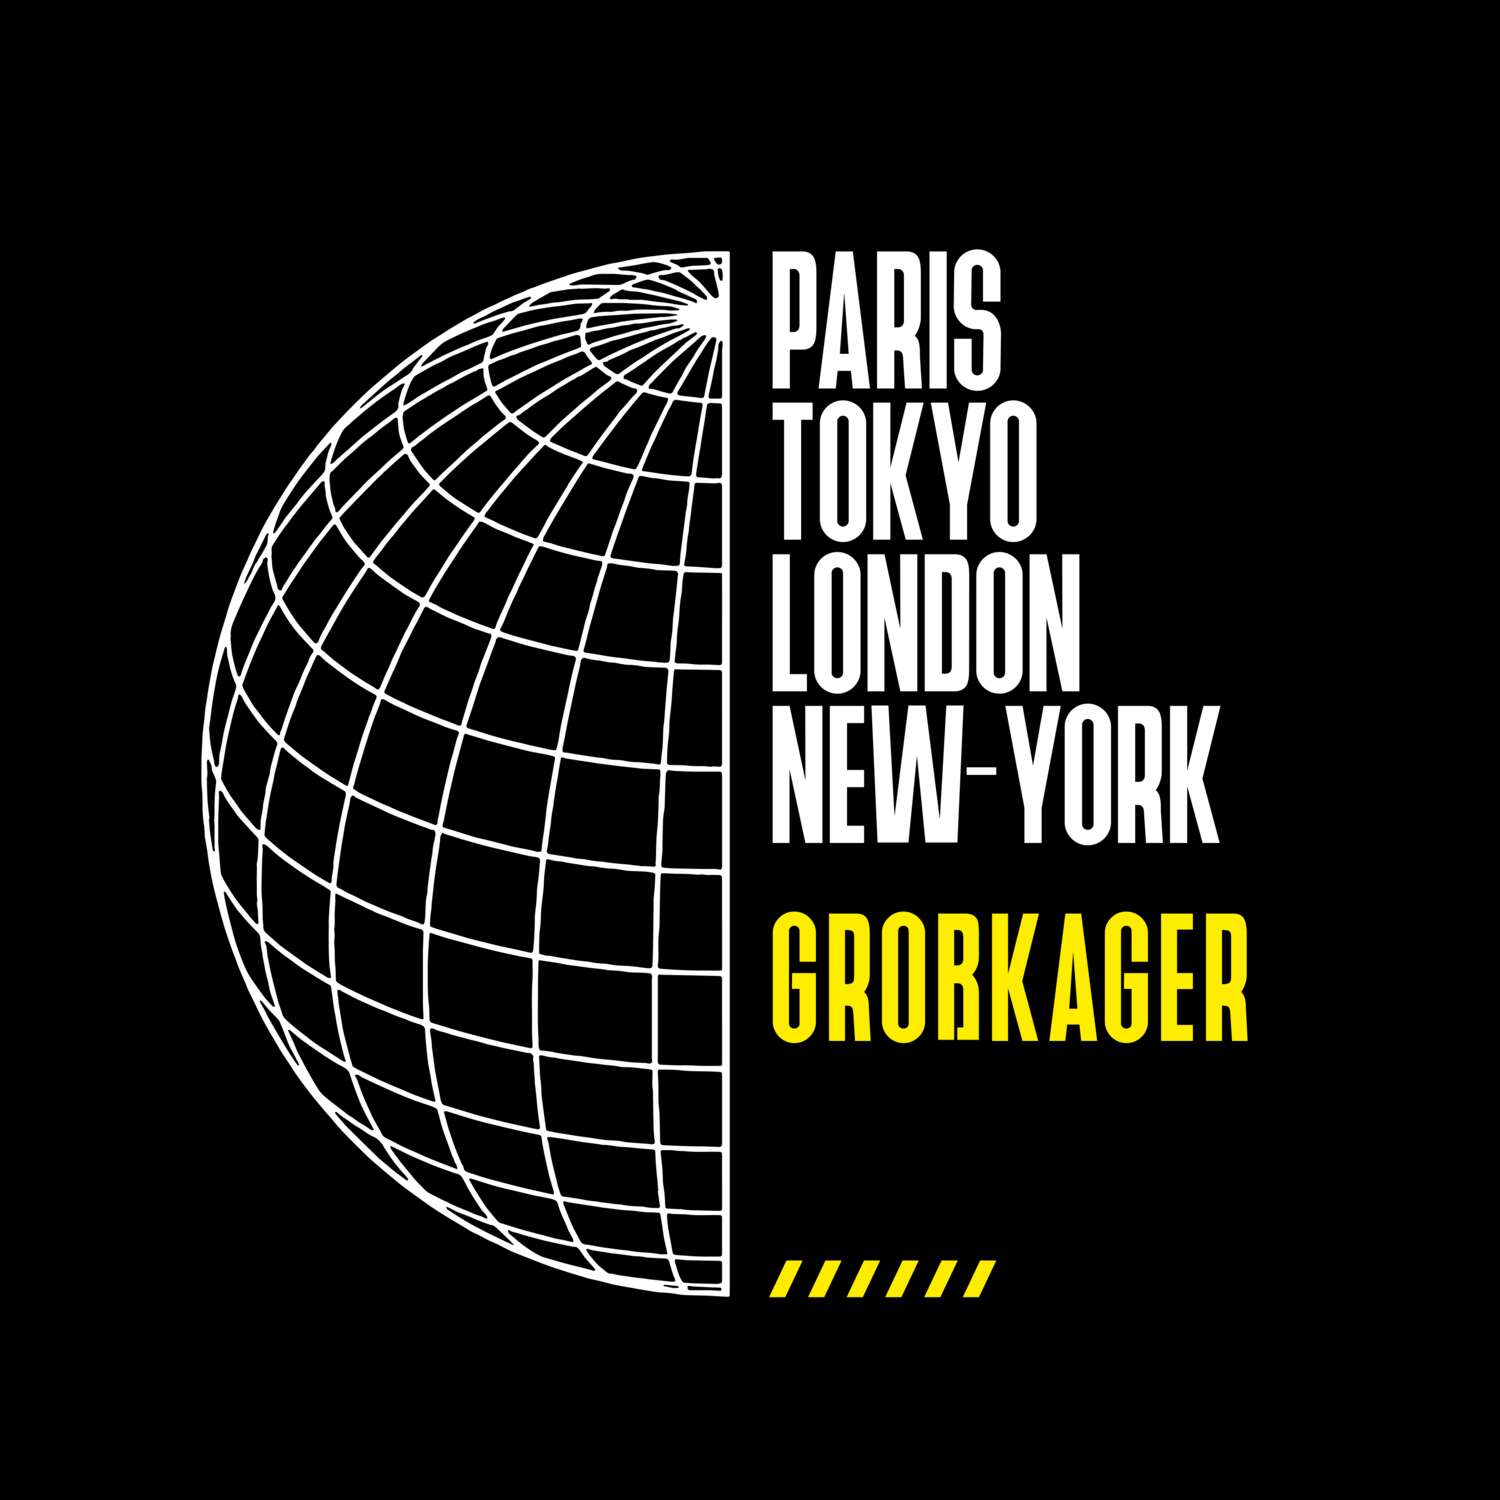 Großkager T-Shirt »Paris Tokyo London«